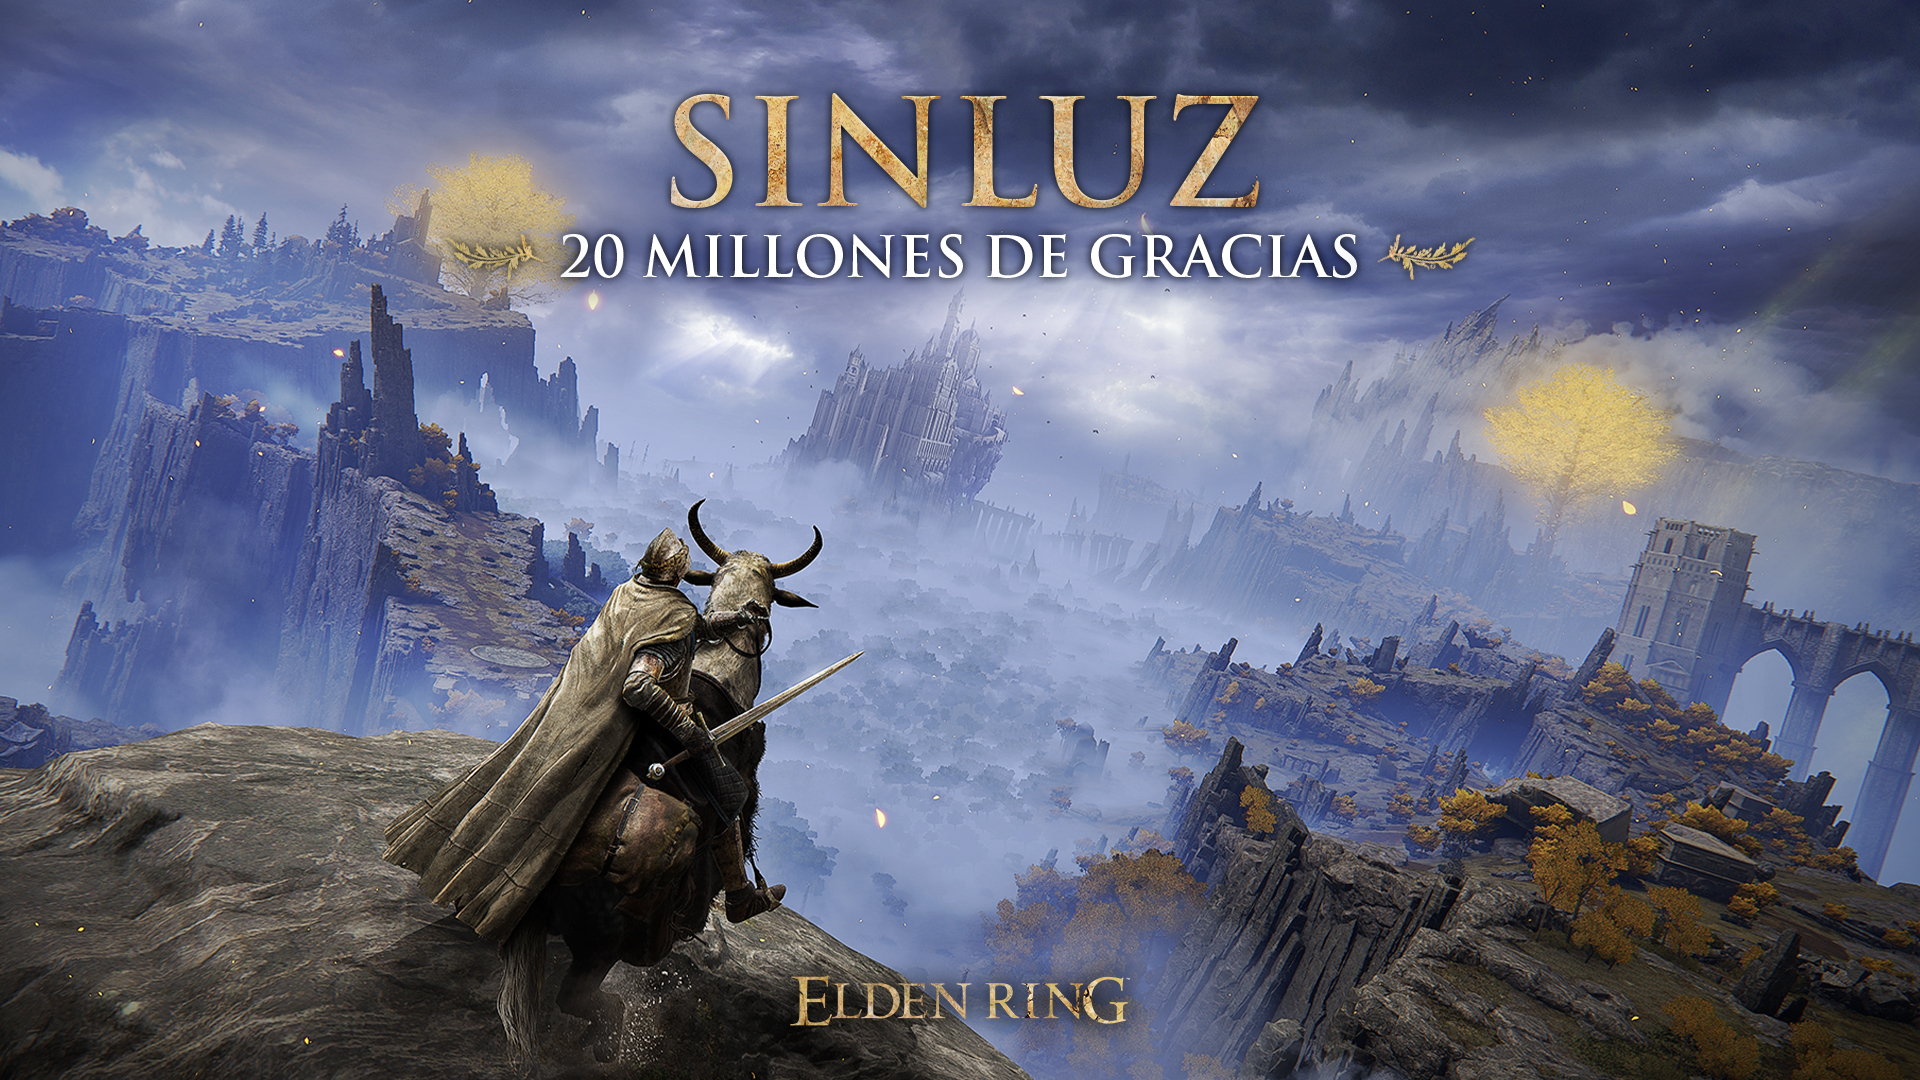 The award-winning action-RPG Elden Ring has sold 20 million copies worldwide